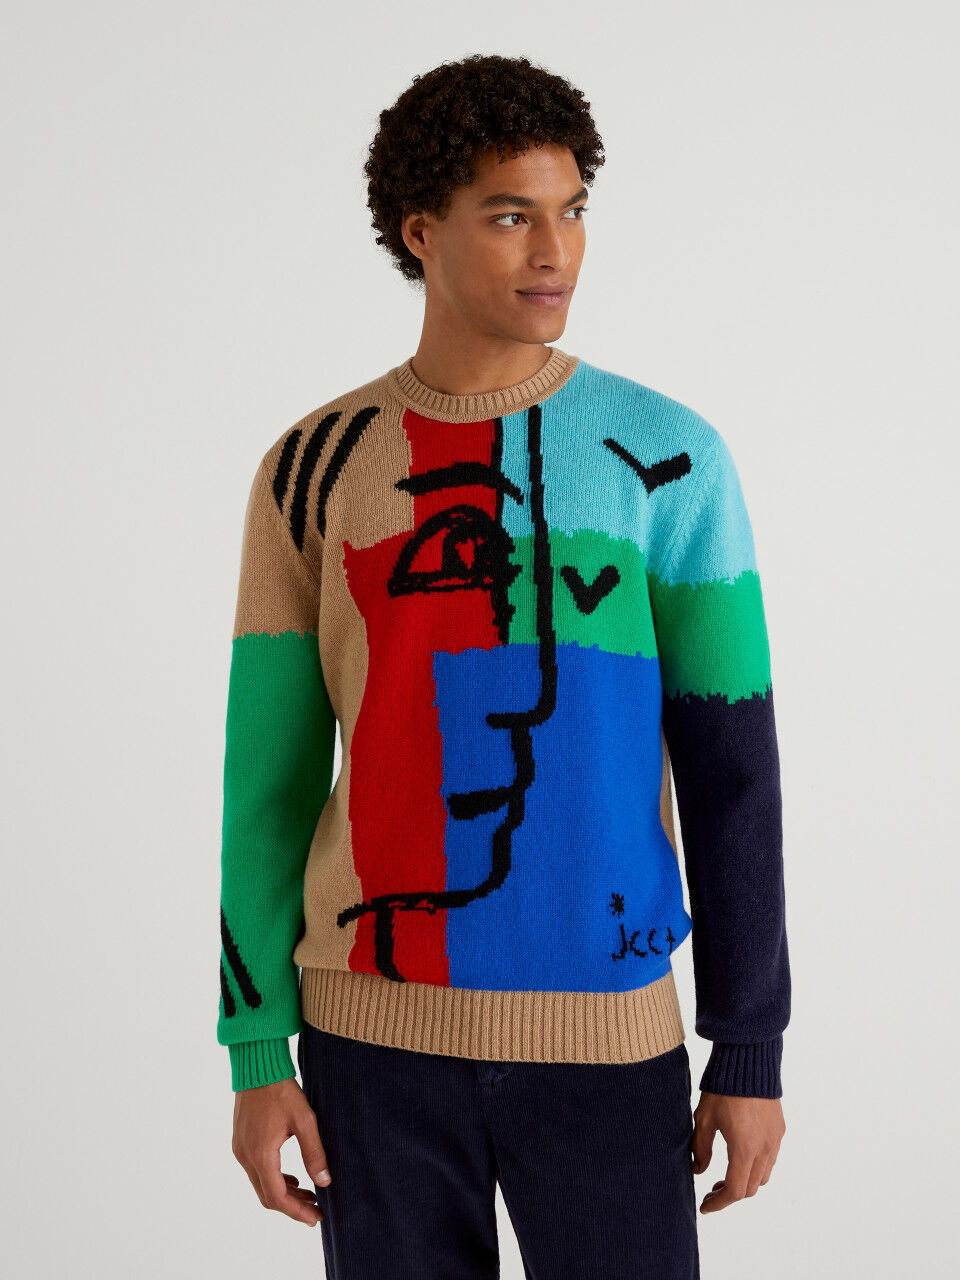 JCCxUCB patchwork sweater